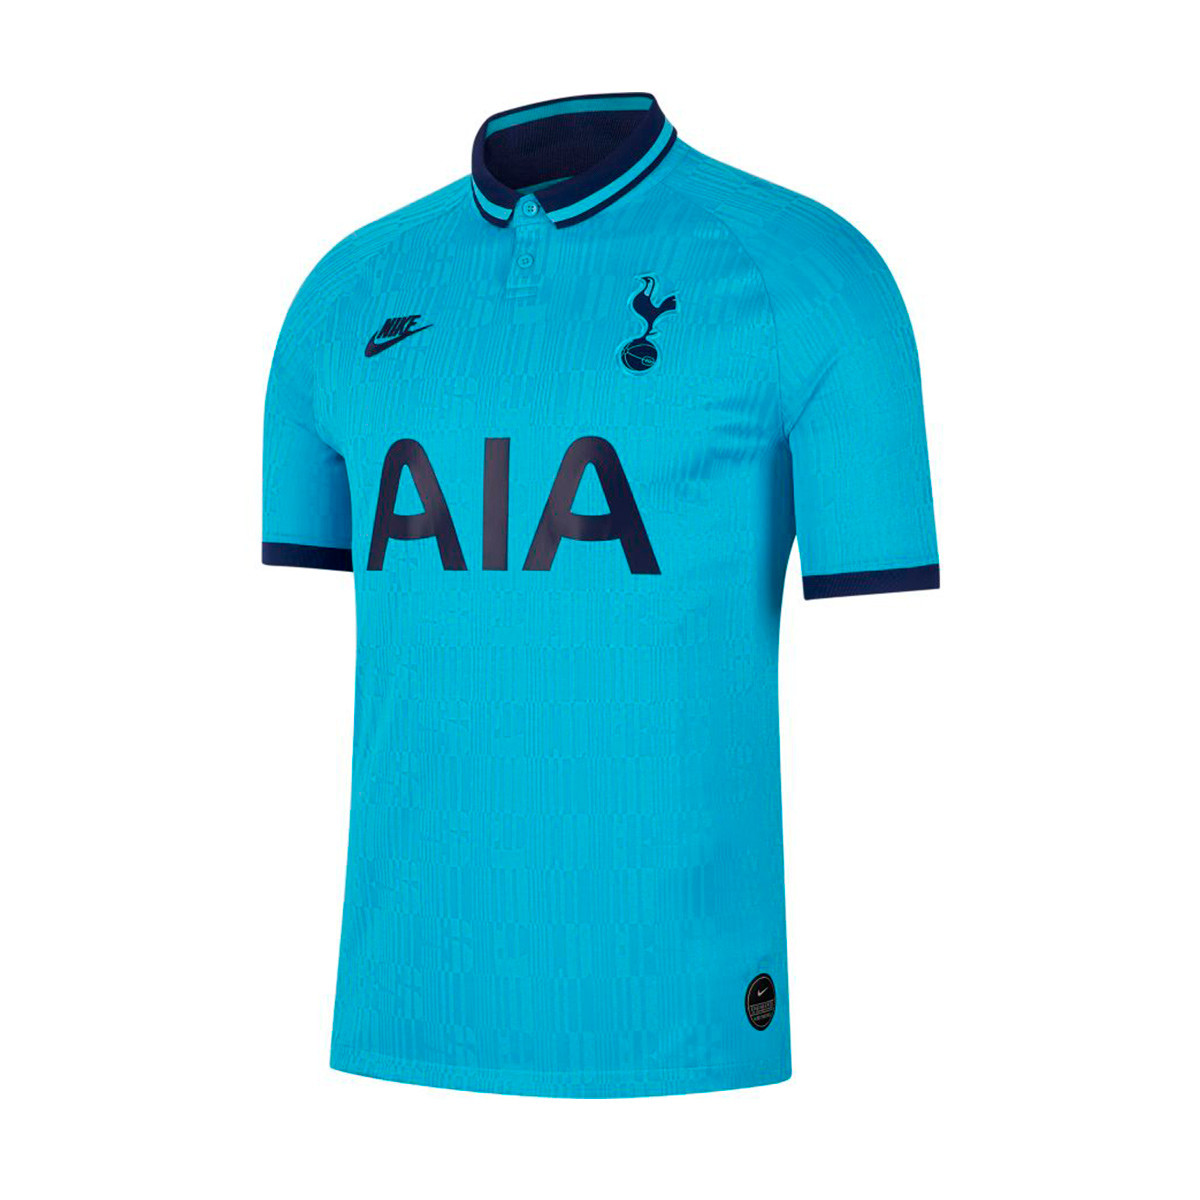 Jersey Nike Tottenham Hotspur Breathe Stadium 2019-2020 Third Blue  fury-Binary blue - Football store Fútbol Emotion